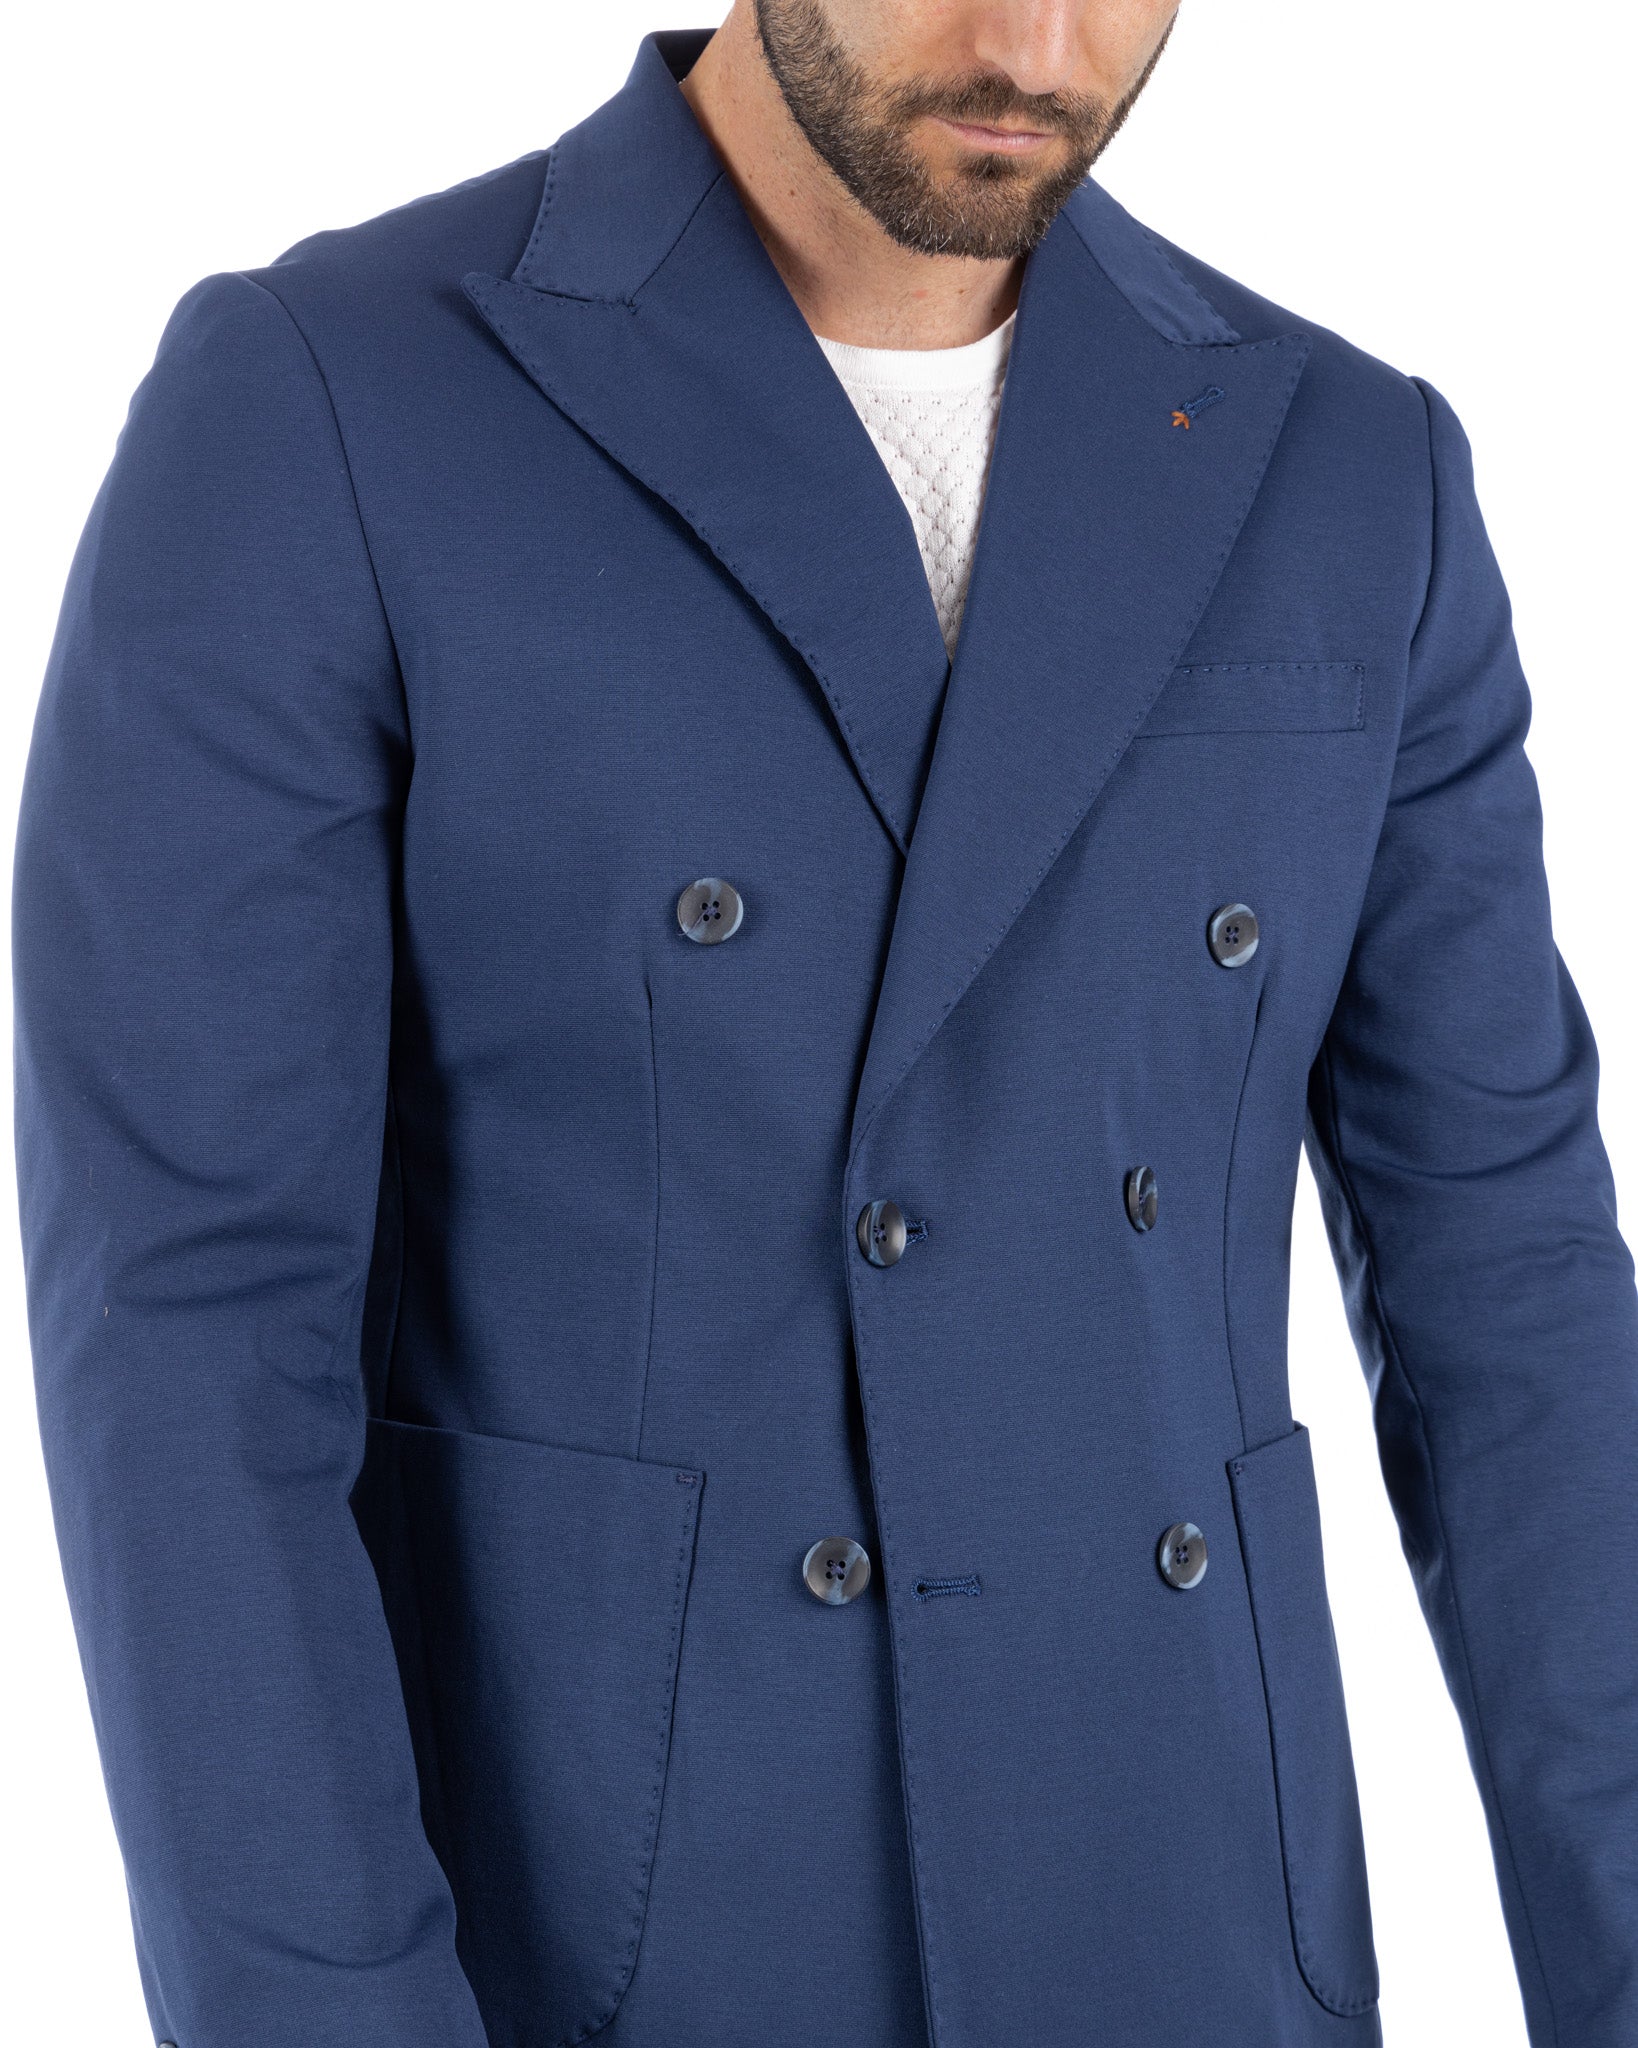 Ostuni - blue double-breasted jacket